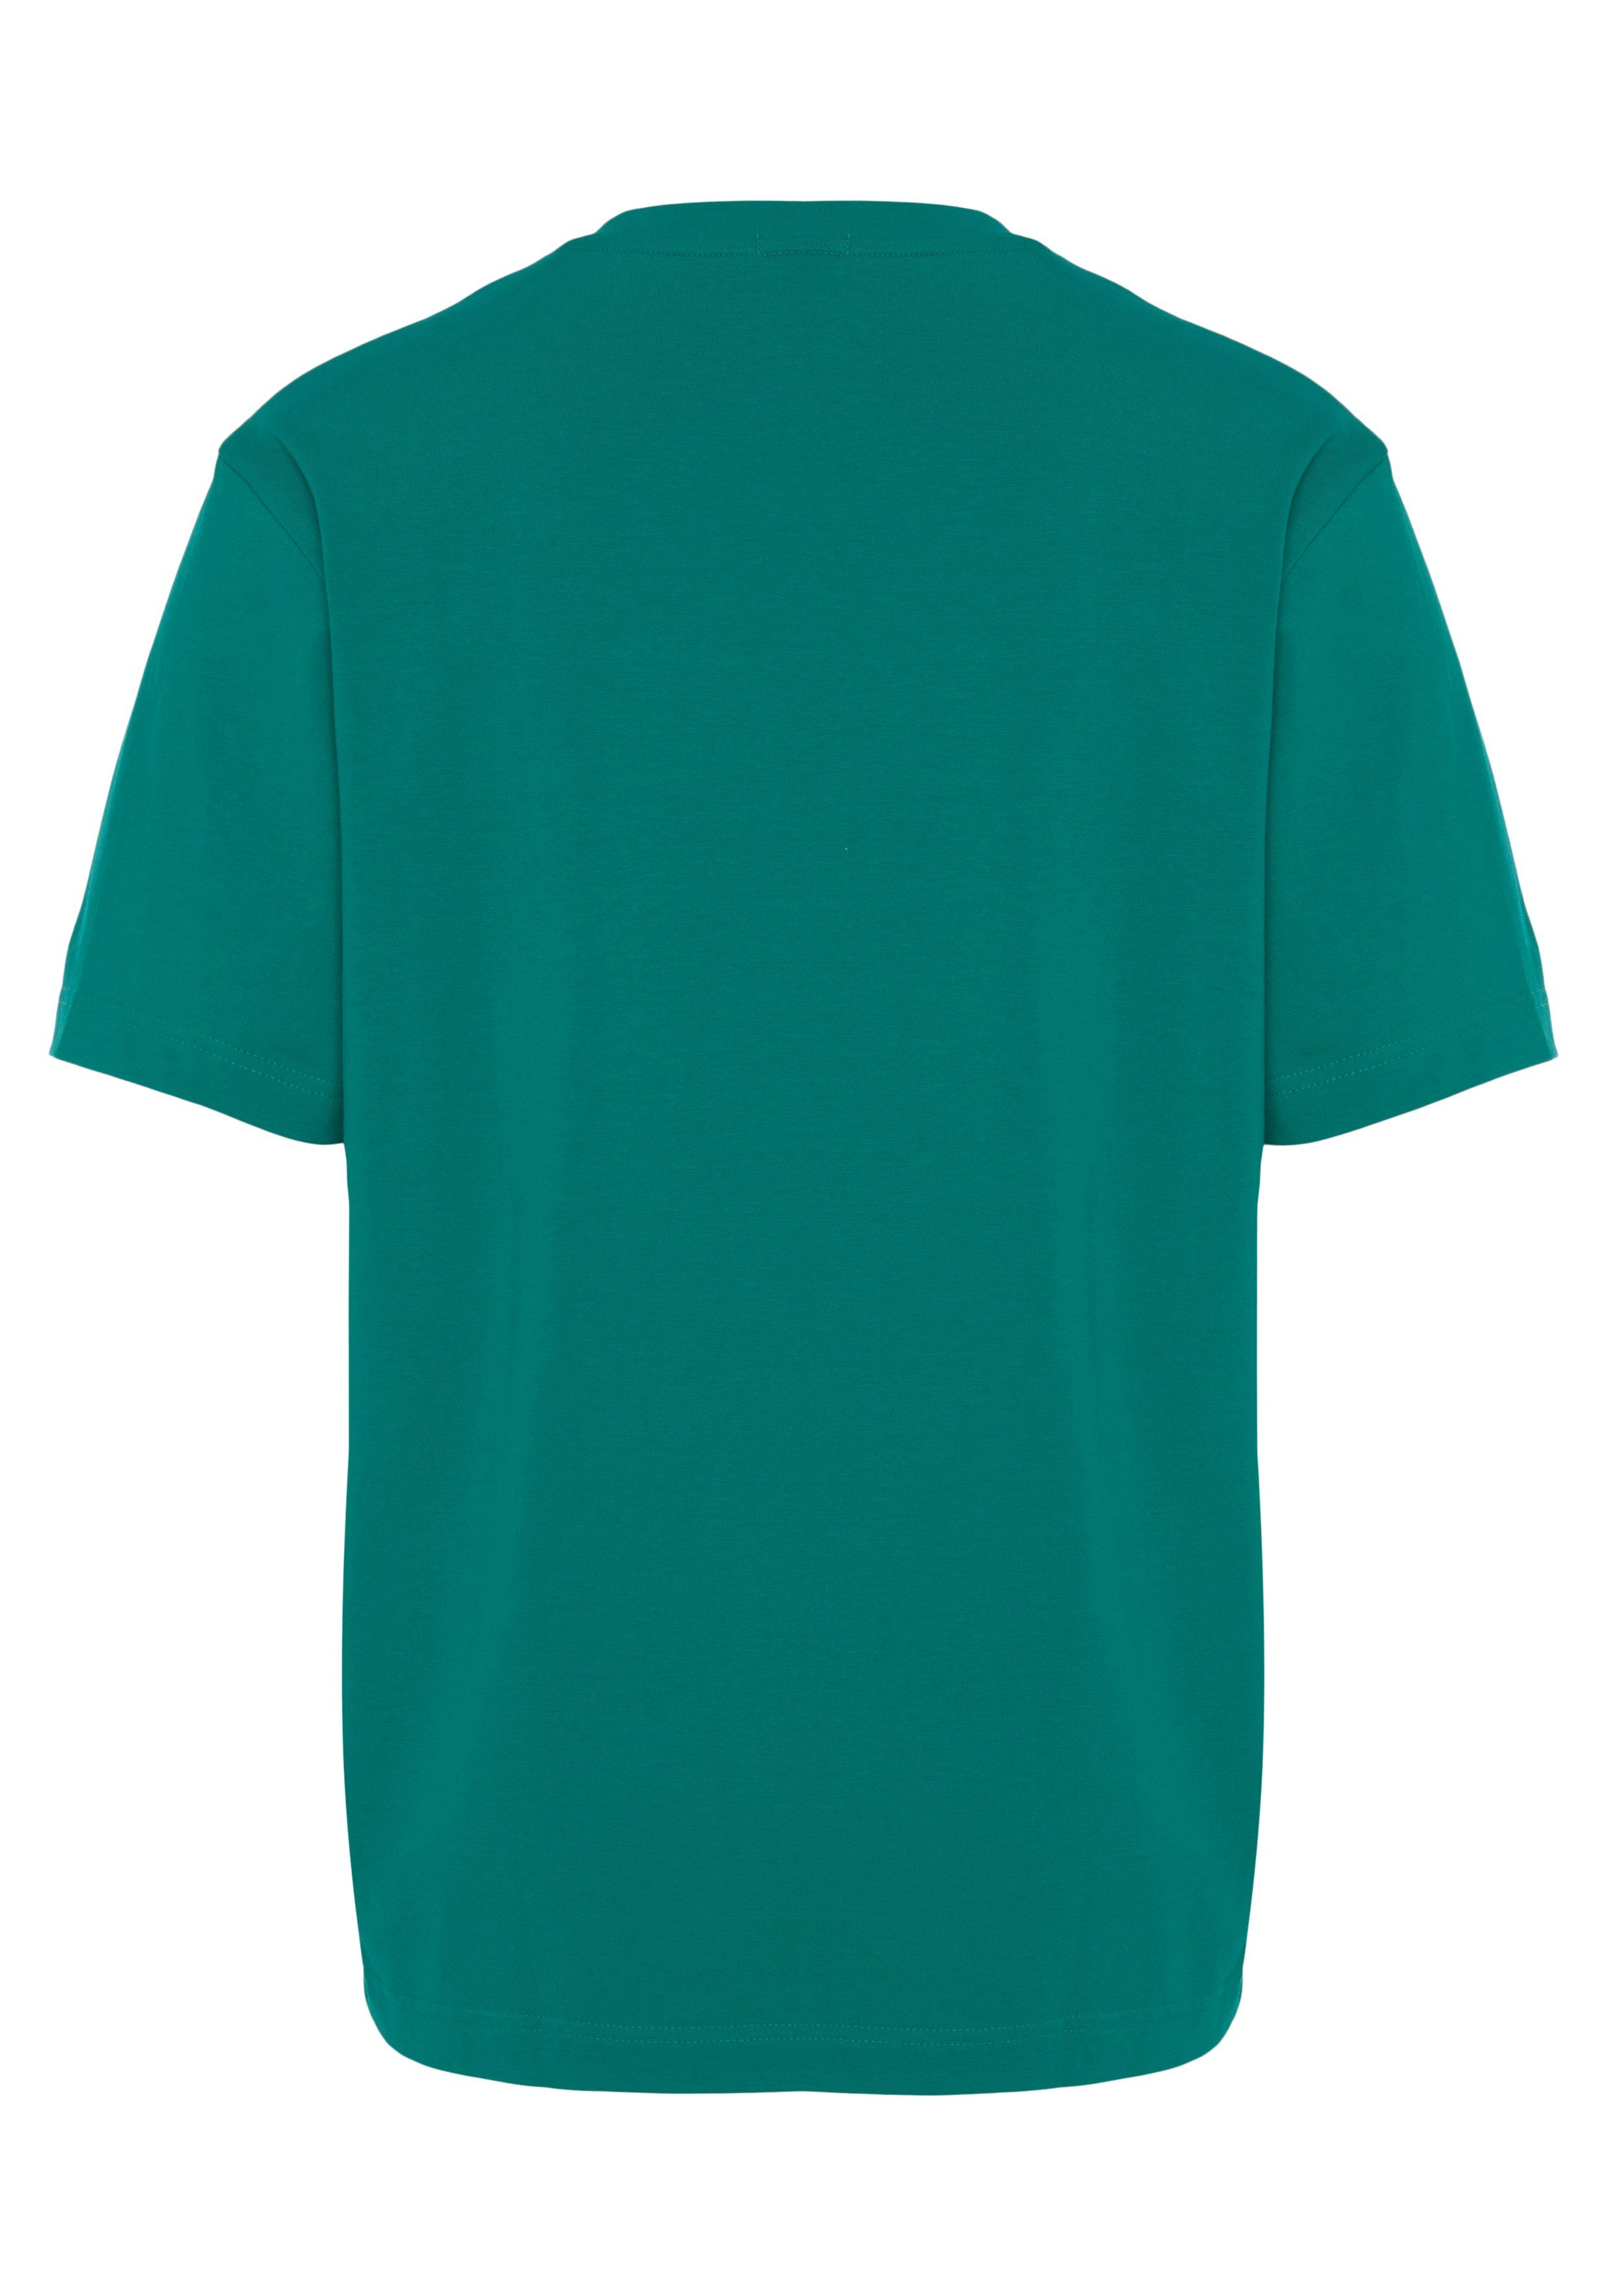 TChup mit Green303 Rundhalsausschnitt BOSS ORANGE T-Shirt Dark